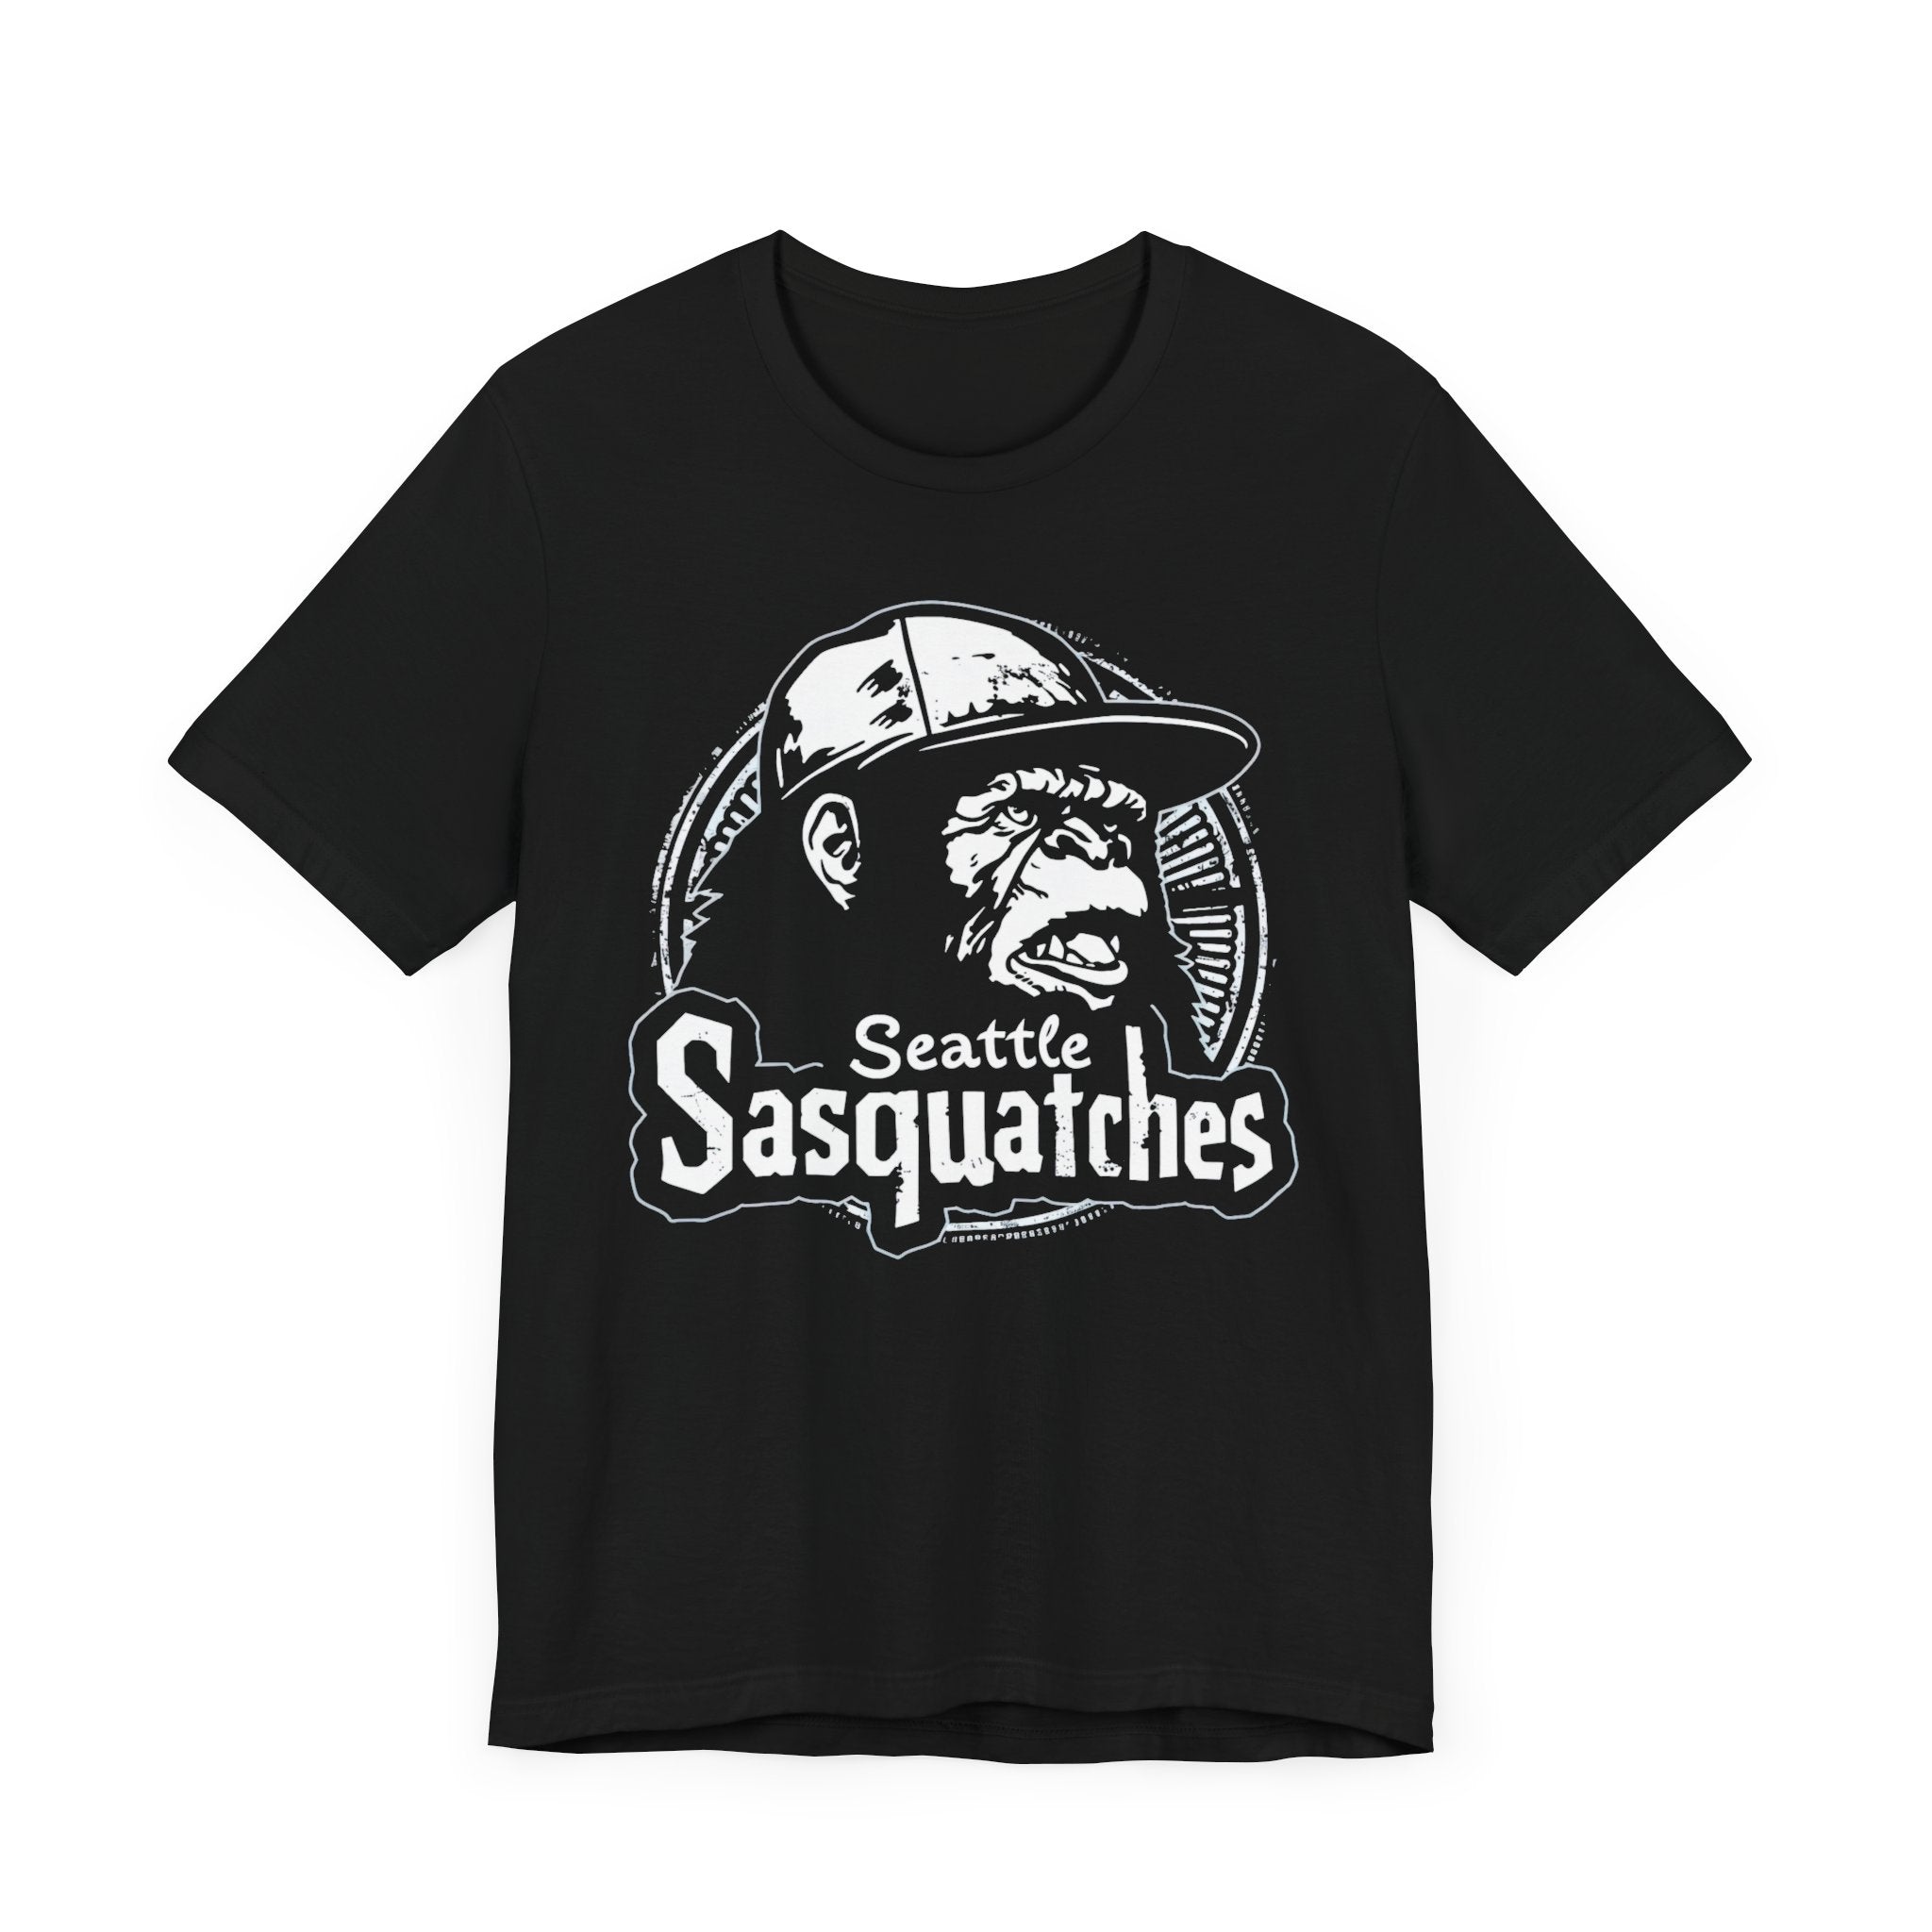 Seattle Sasquatches T-Shirt Baseball Team Graphic Tee